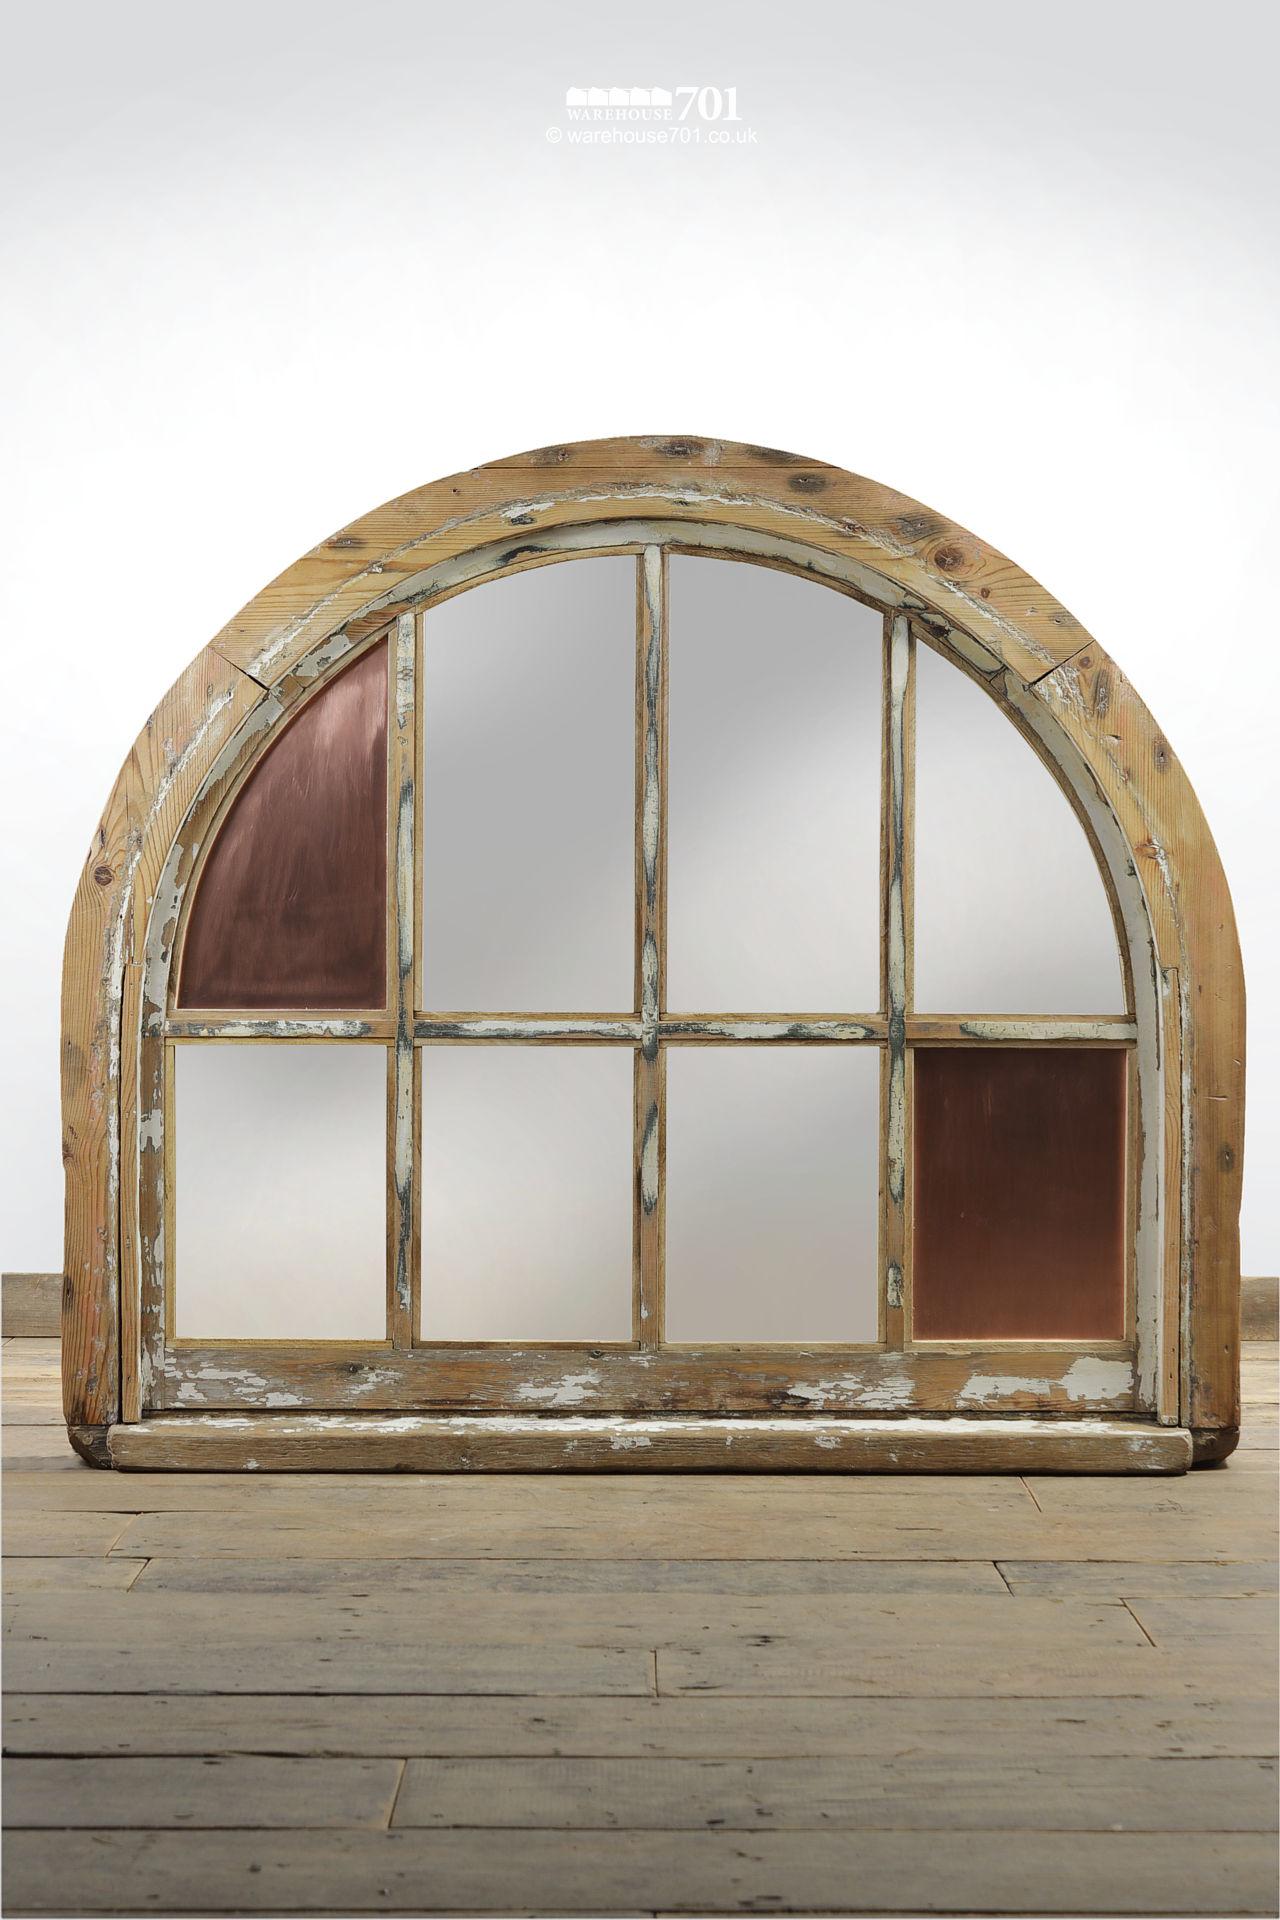 Impressive Architectural Copper and Wood Window Mirror #4